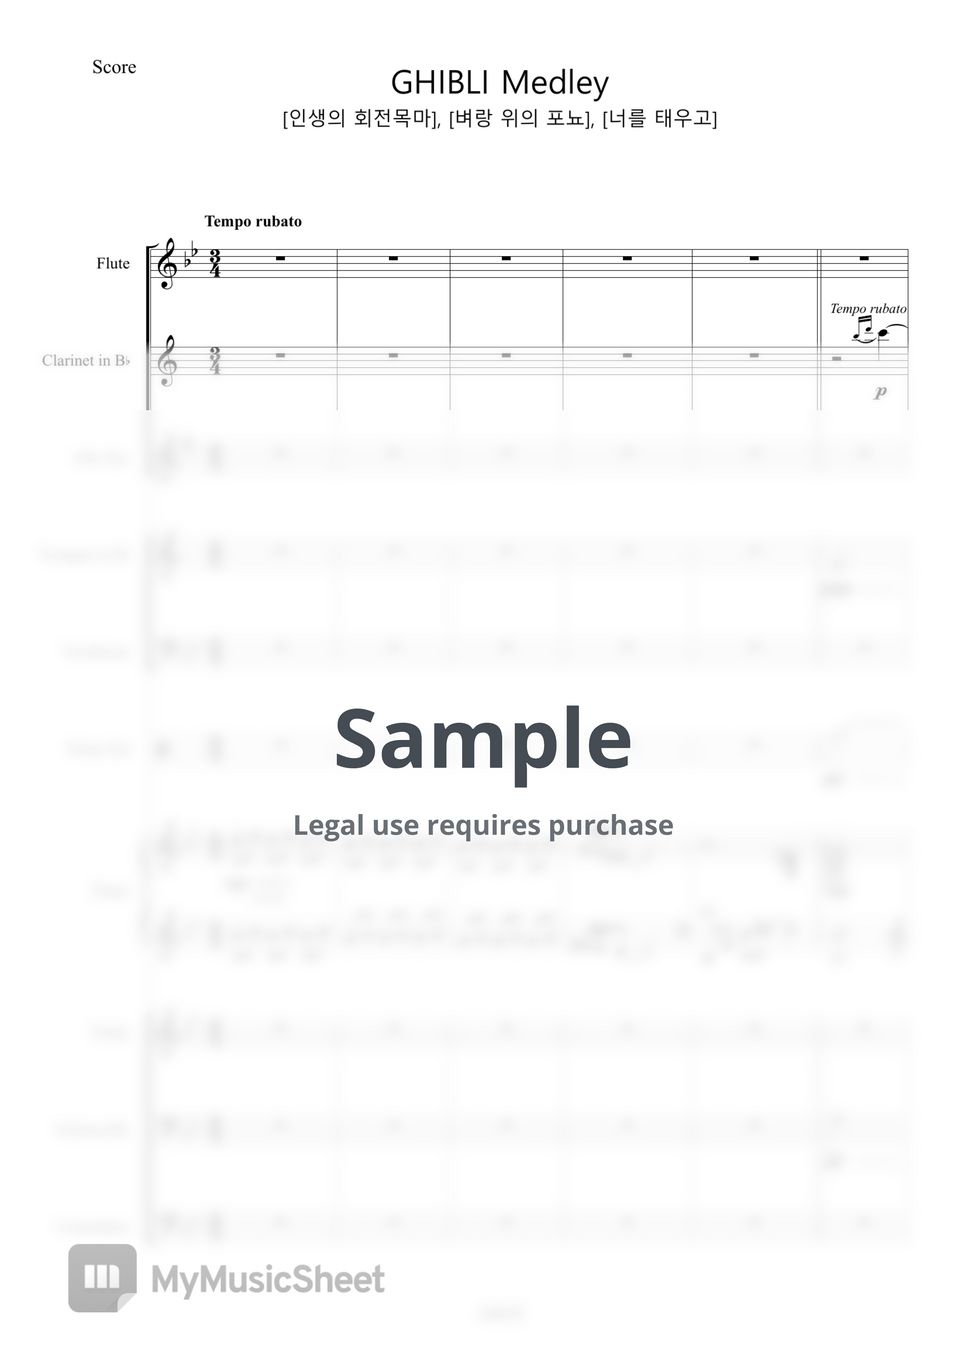 Joe Hisaishi - GHIBLI ANIME MEDLEY for orchestra (Custom orchestra Ver.) by ABGB